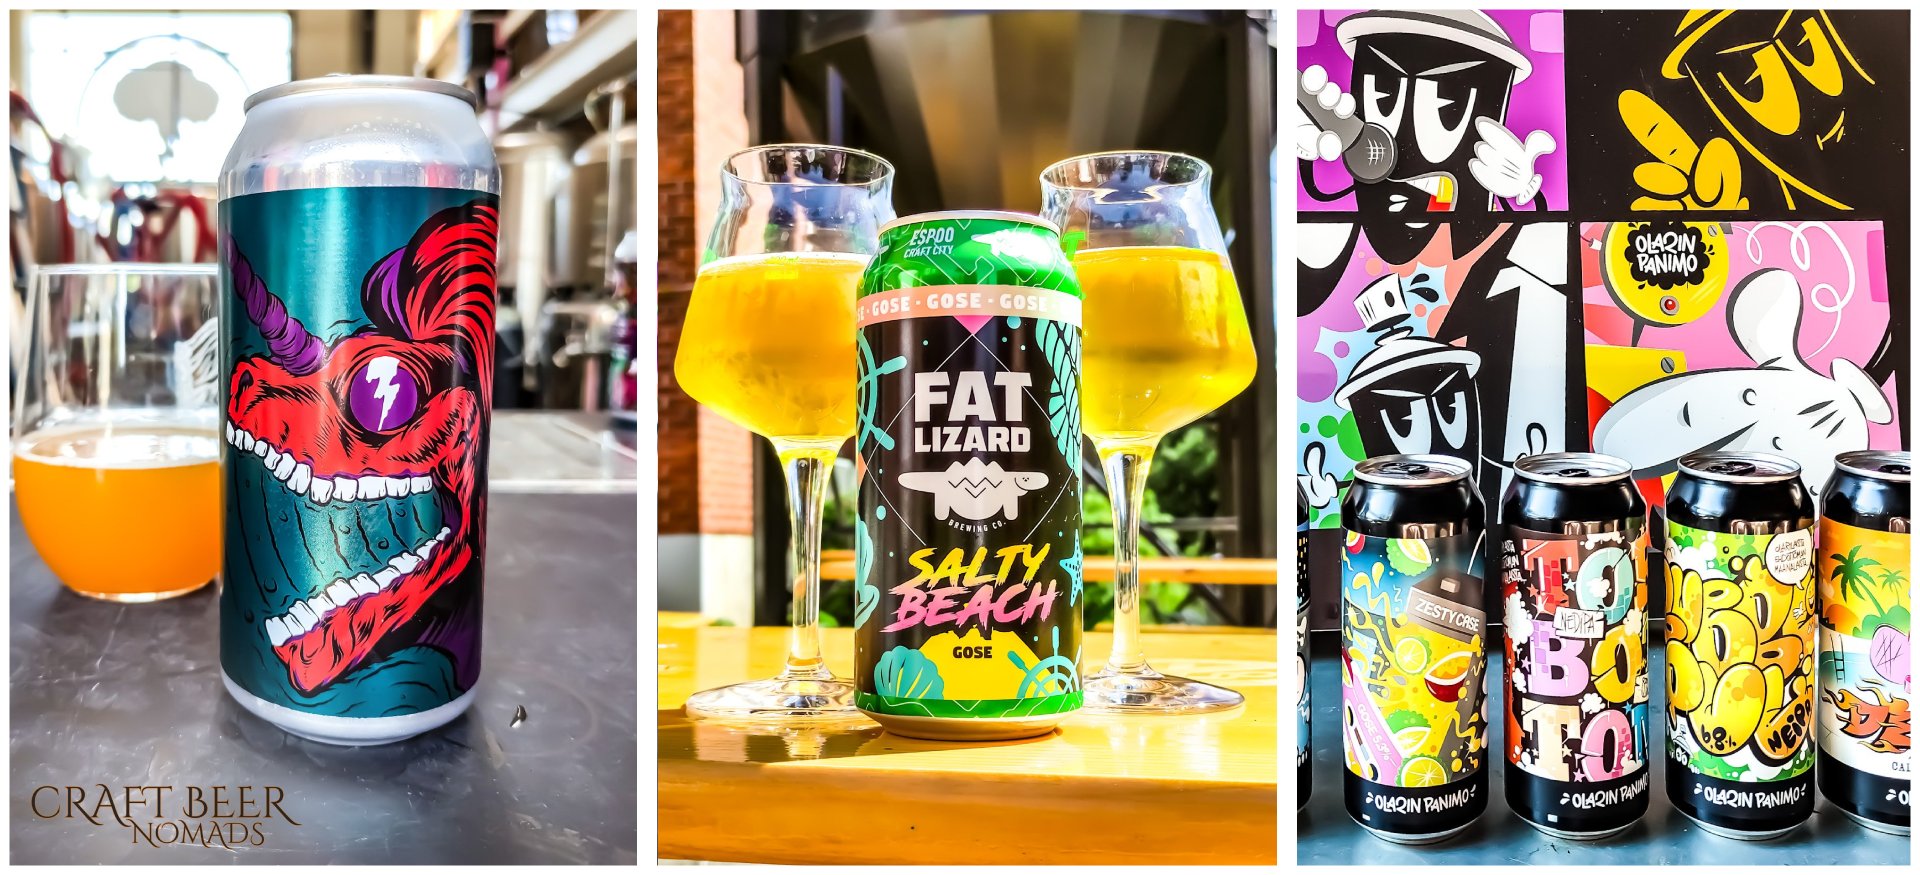 Olari, Salama and Fat Lizard | Craft beer and microbreweries in Espoo Finland | Craft Beer Nomads